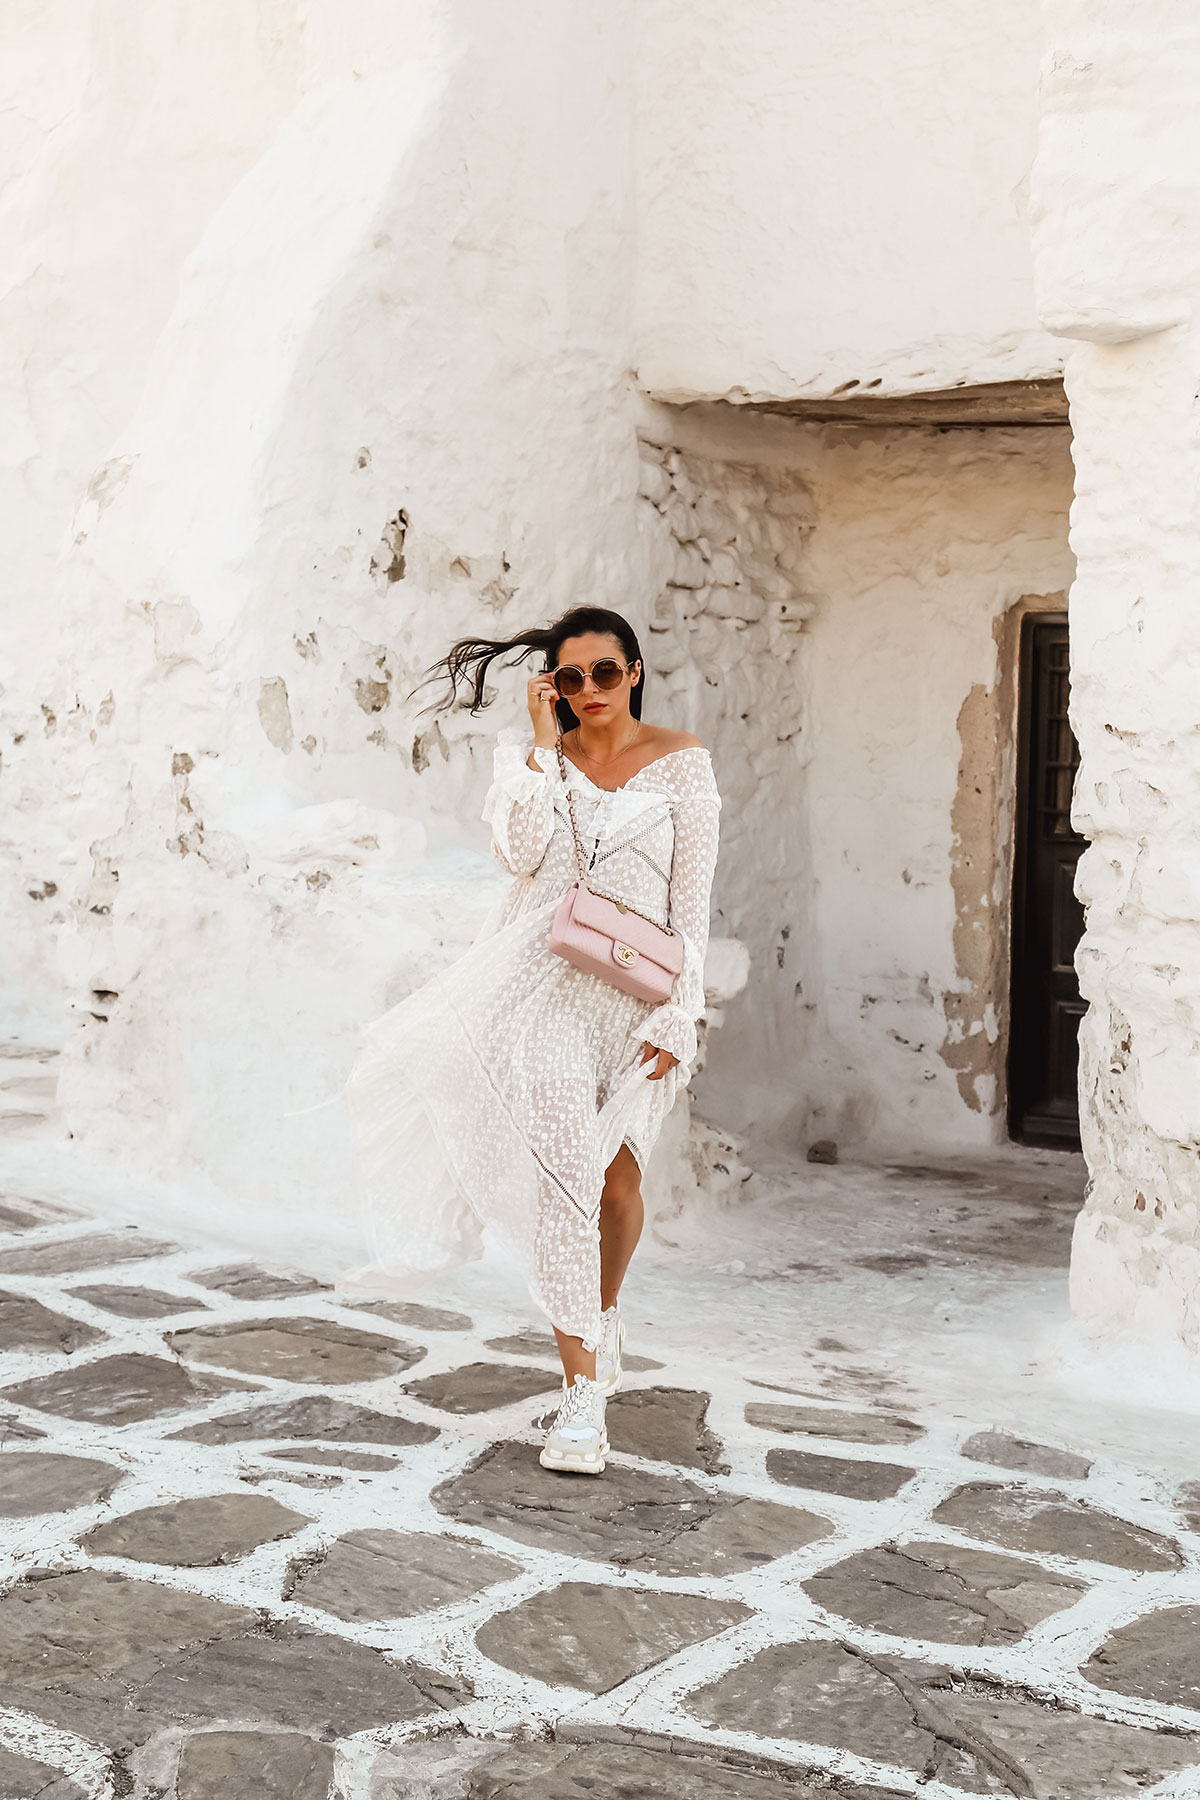 Self-Portrait Dress in Mykonos worn by Stella Asteria - Fashion & Lifestyle Blogger - worn with pink Chanel bag, Balenciaga Triple S and Chloe sunglasses